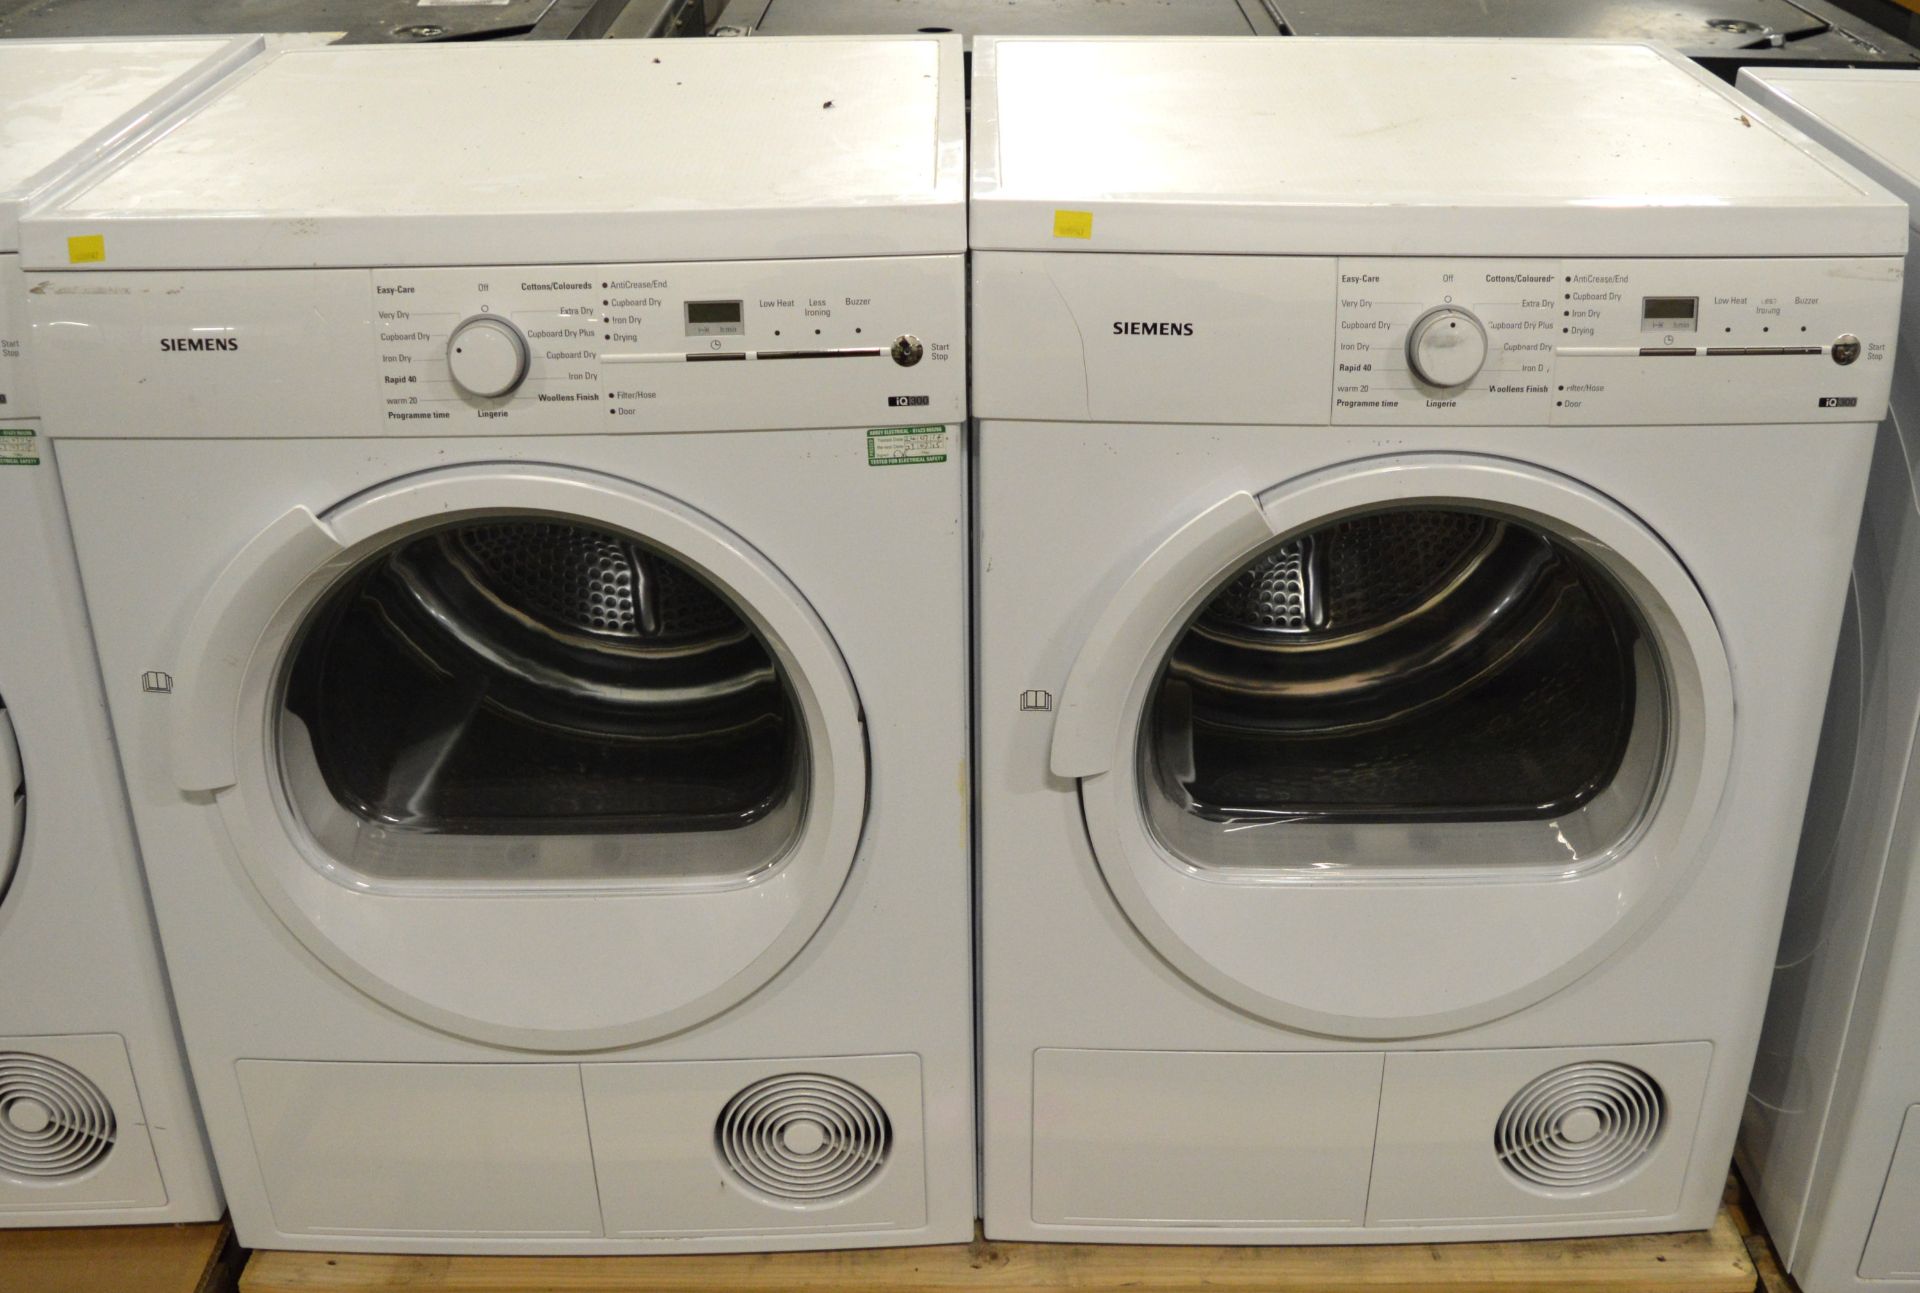 2x Siemens iQ300 Clothes Dryers.